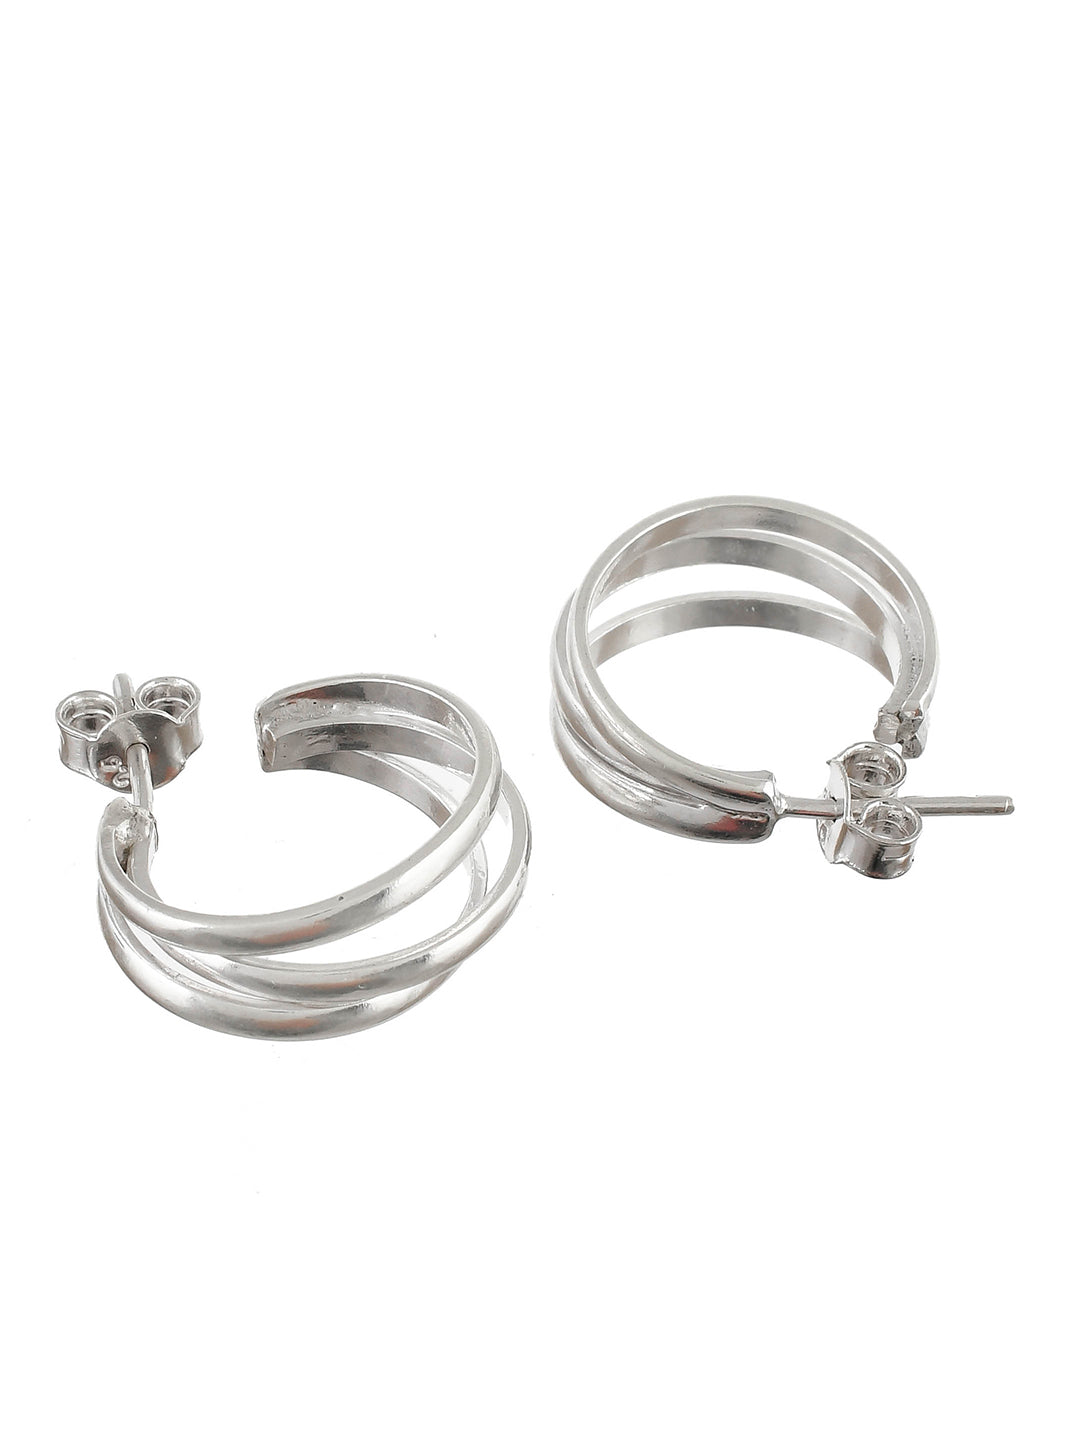 925 Silver Bali Hoops Earrings | 18mm Diameter